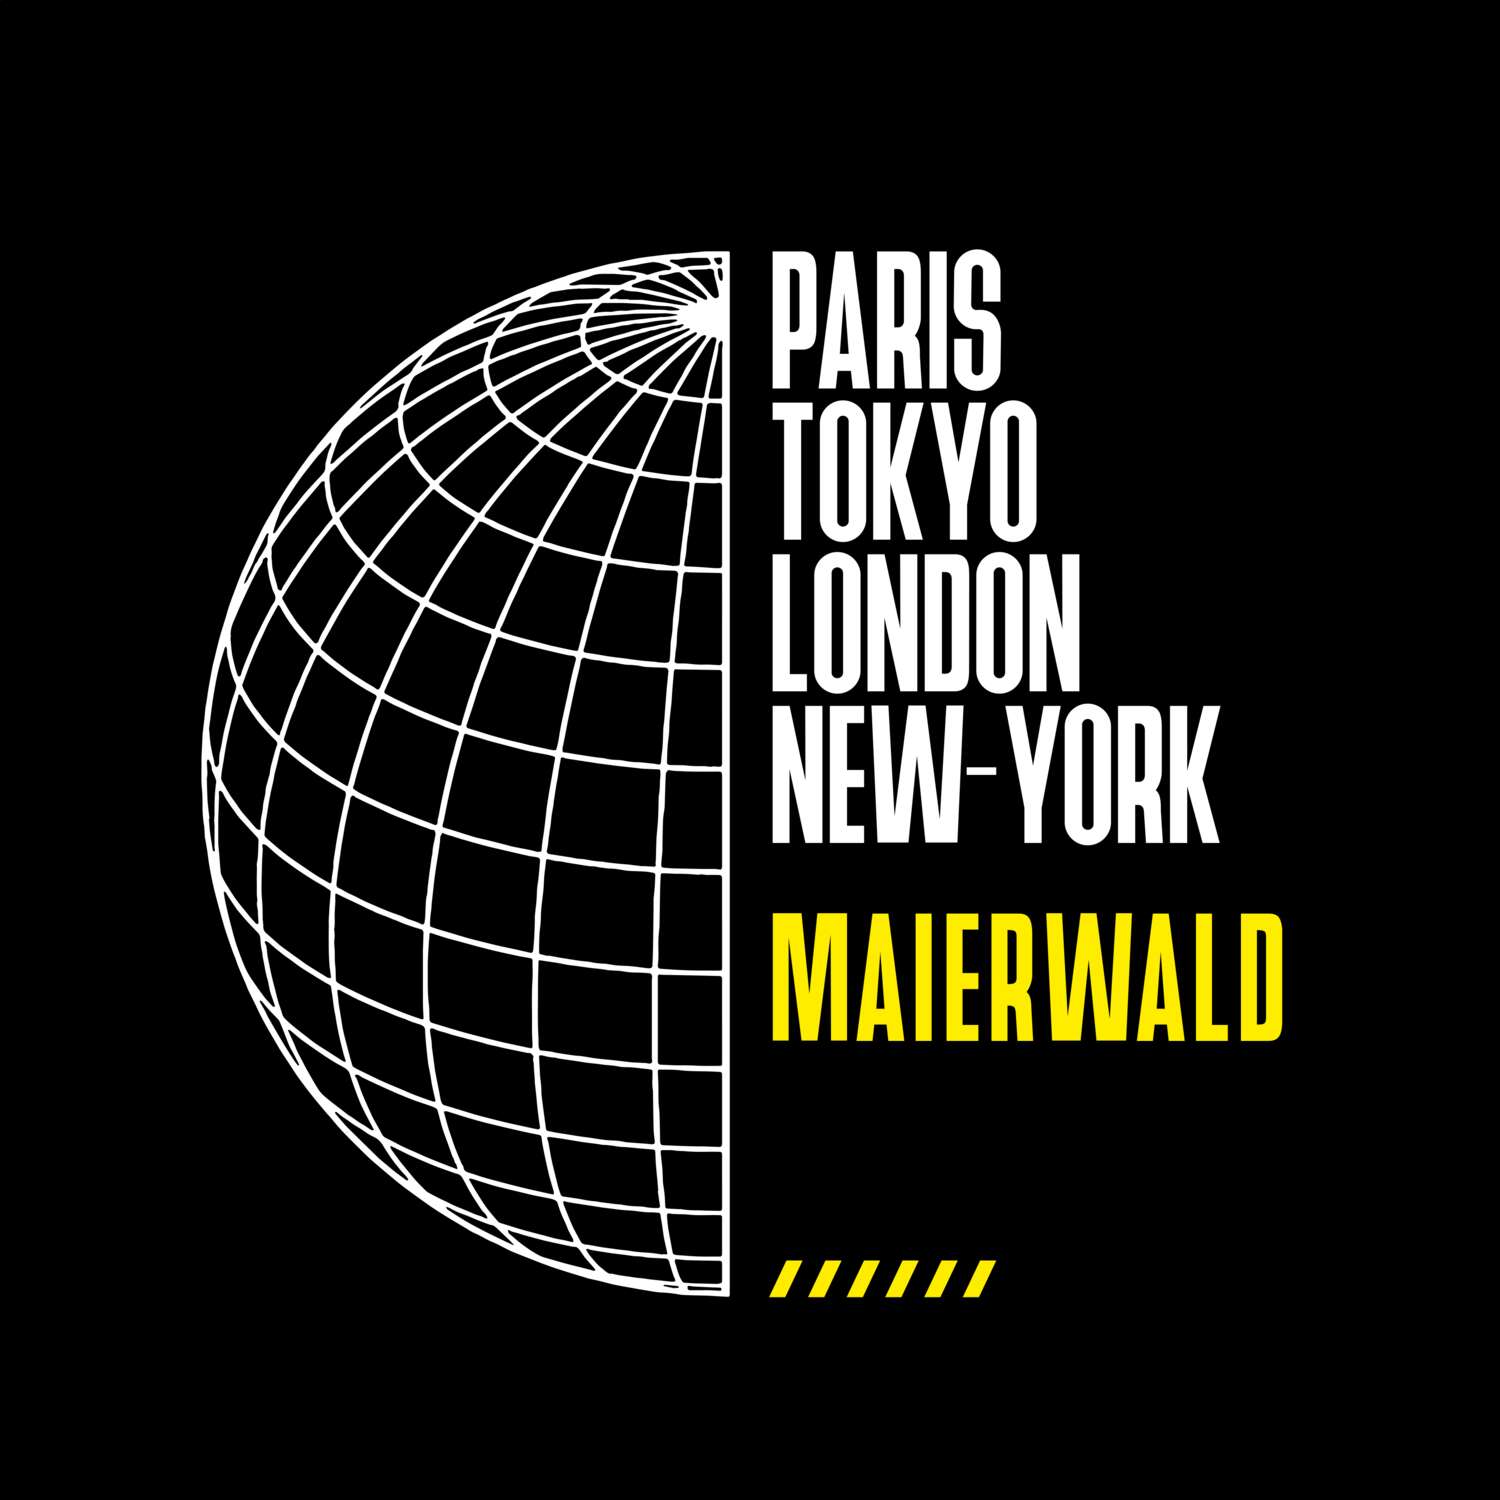 Maierwald T-Shirt »Paris Tokyo London«